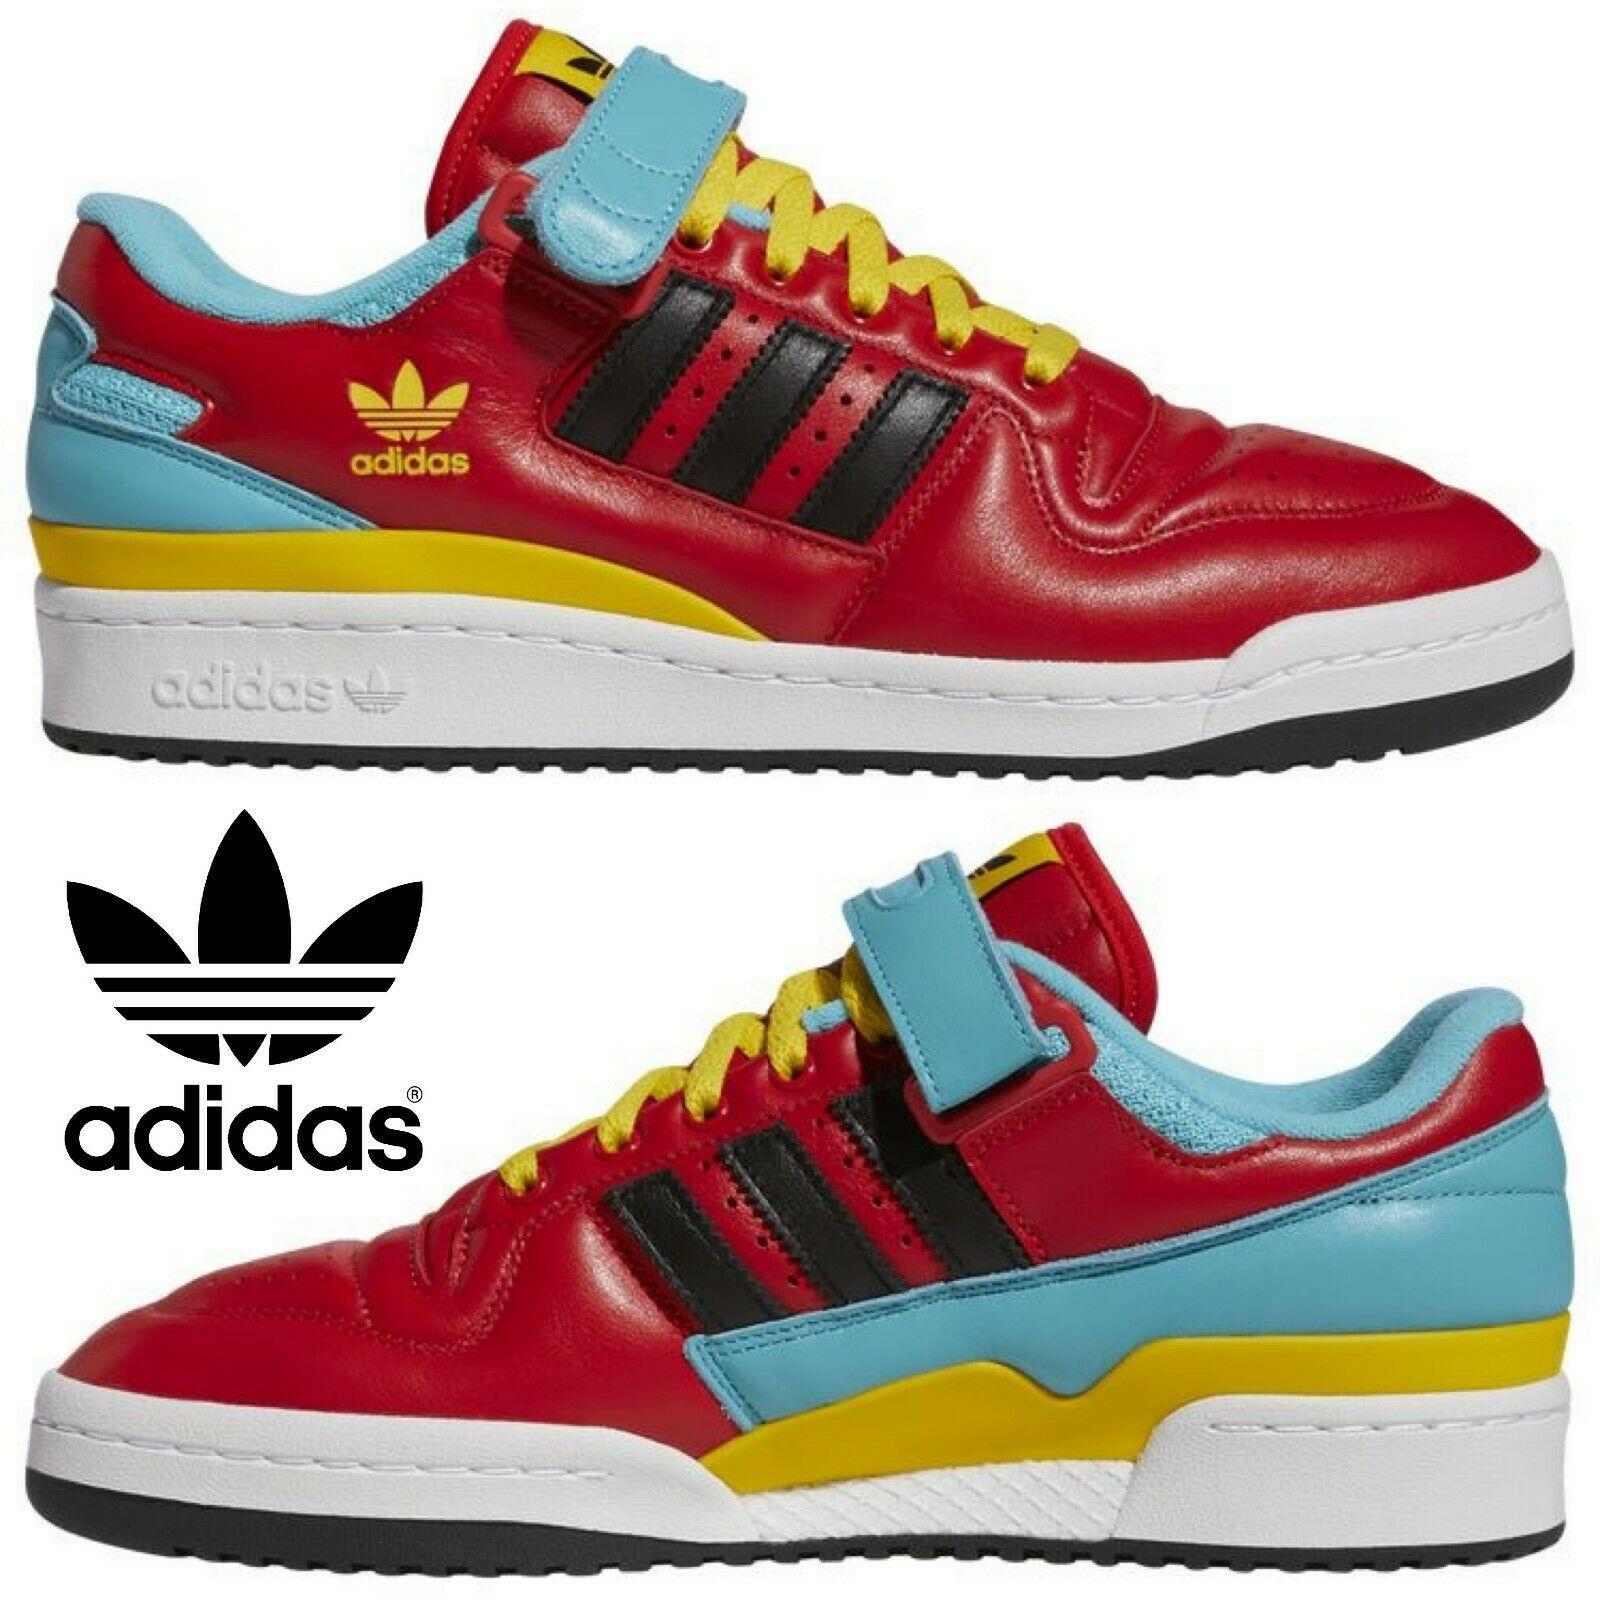 Adidas Originals Forum Low Men`s Sneakers Comfort Sport Casual Shoes Red